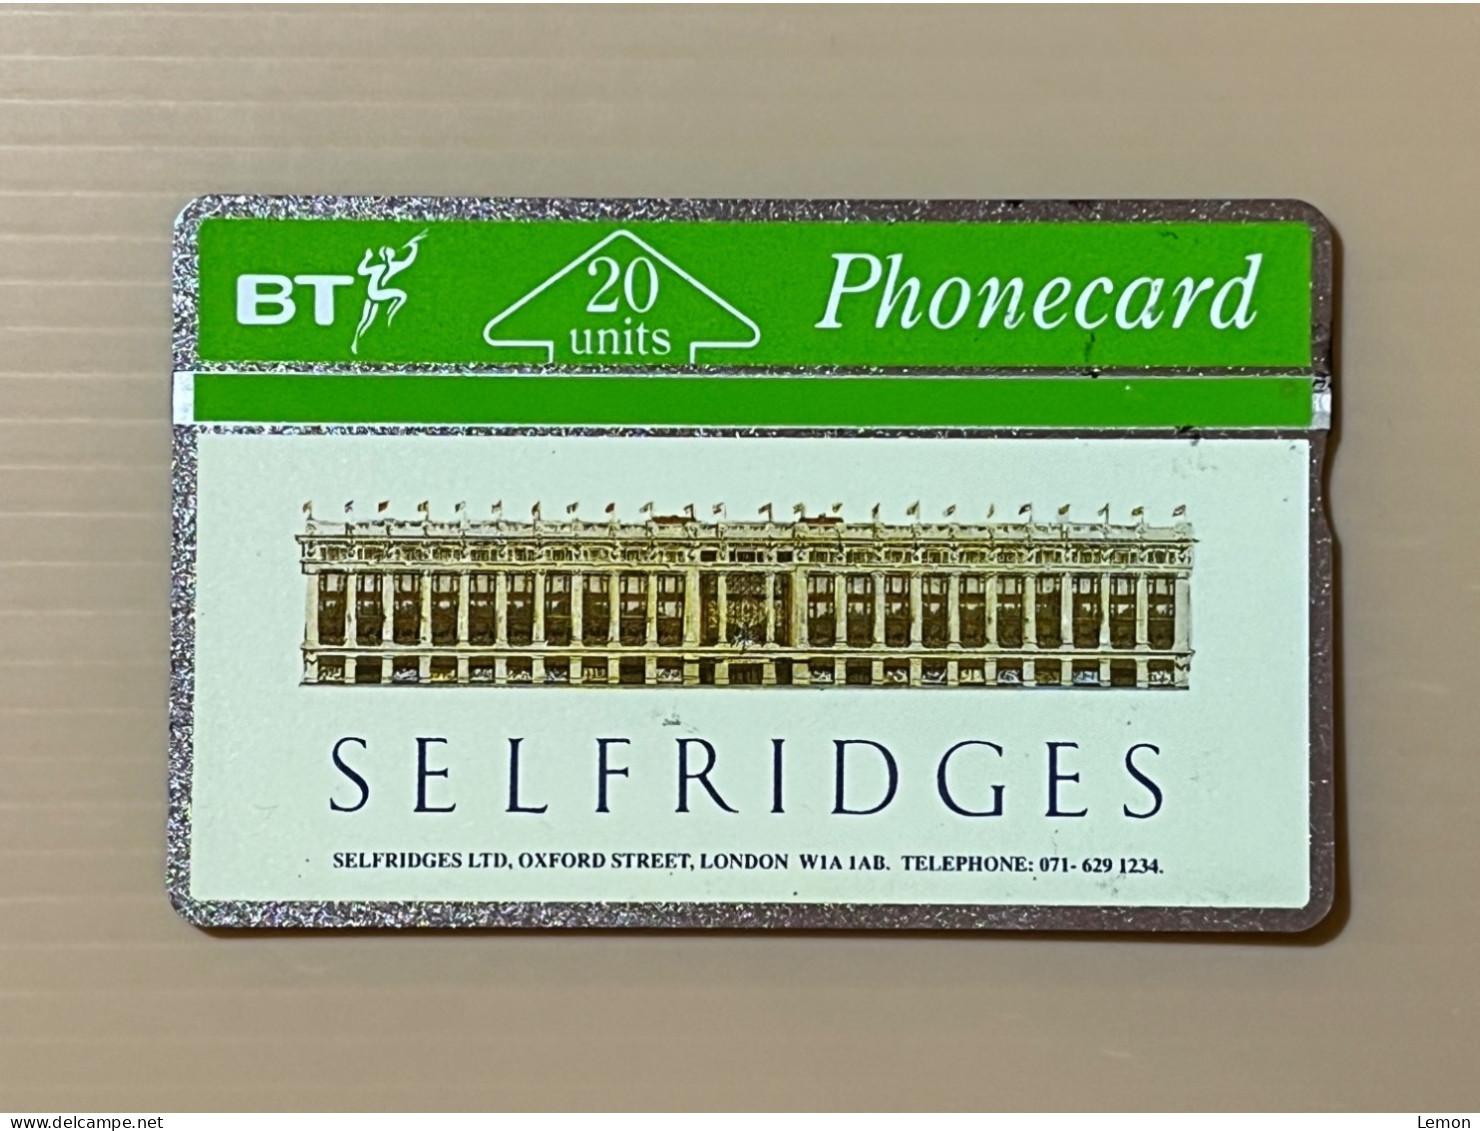 Mint UK United Kingdom - British Telecom Phonecard - BT 20 Units SELFRIDGES - Set Of 1 Mint Card - Collezioni